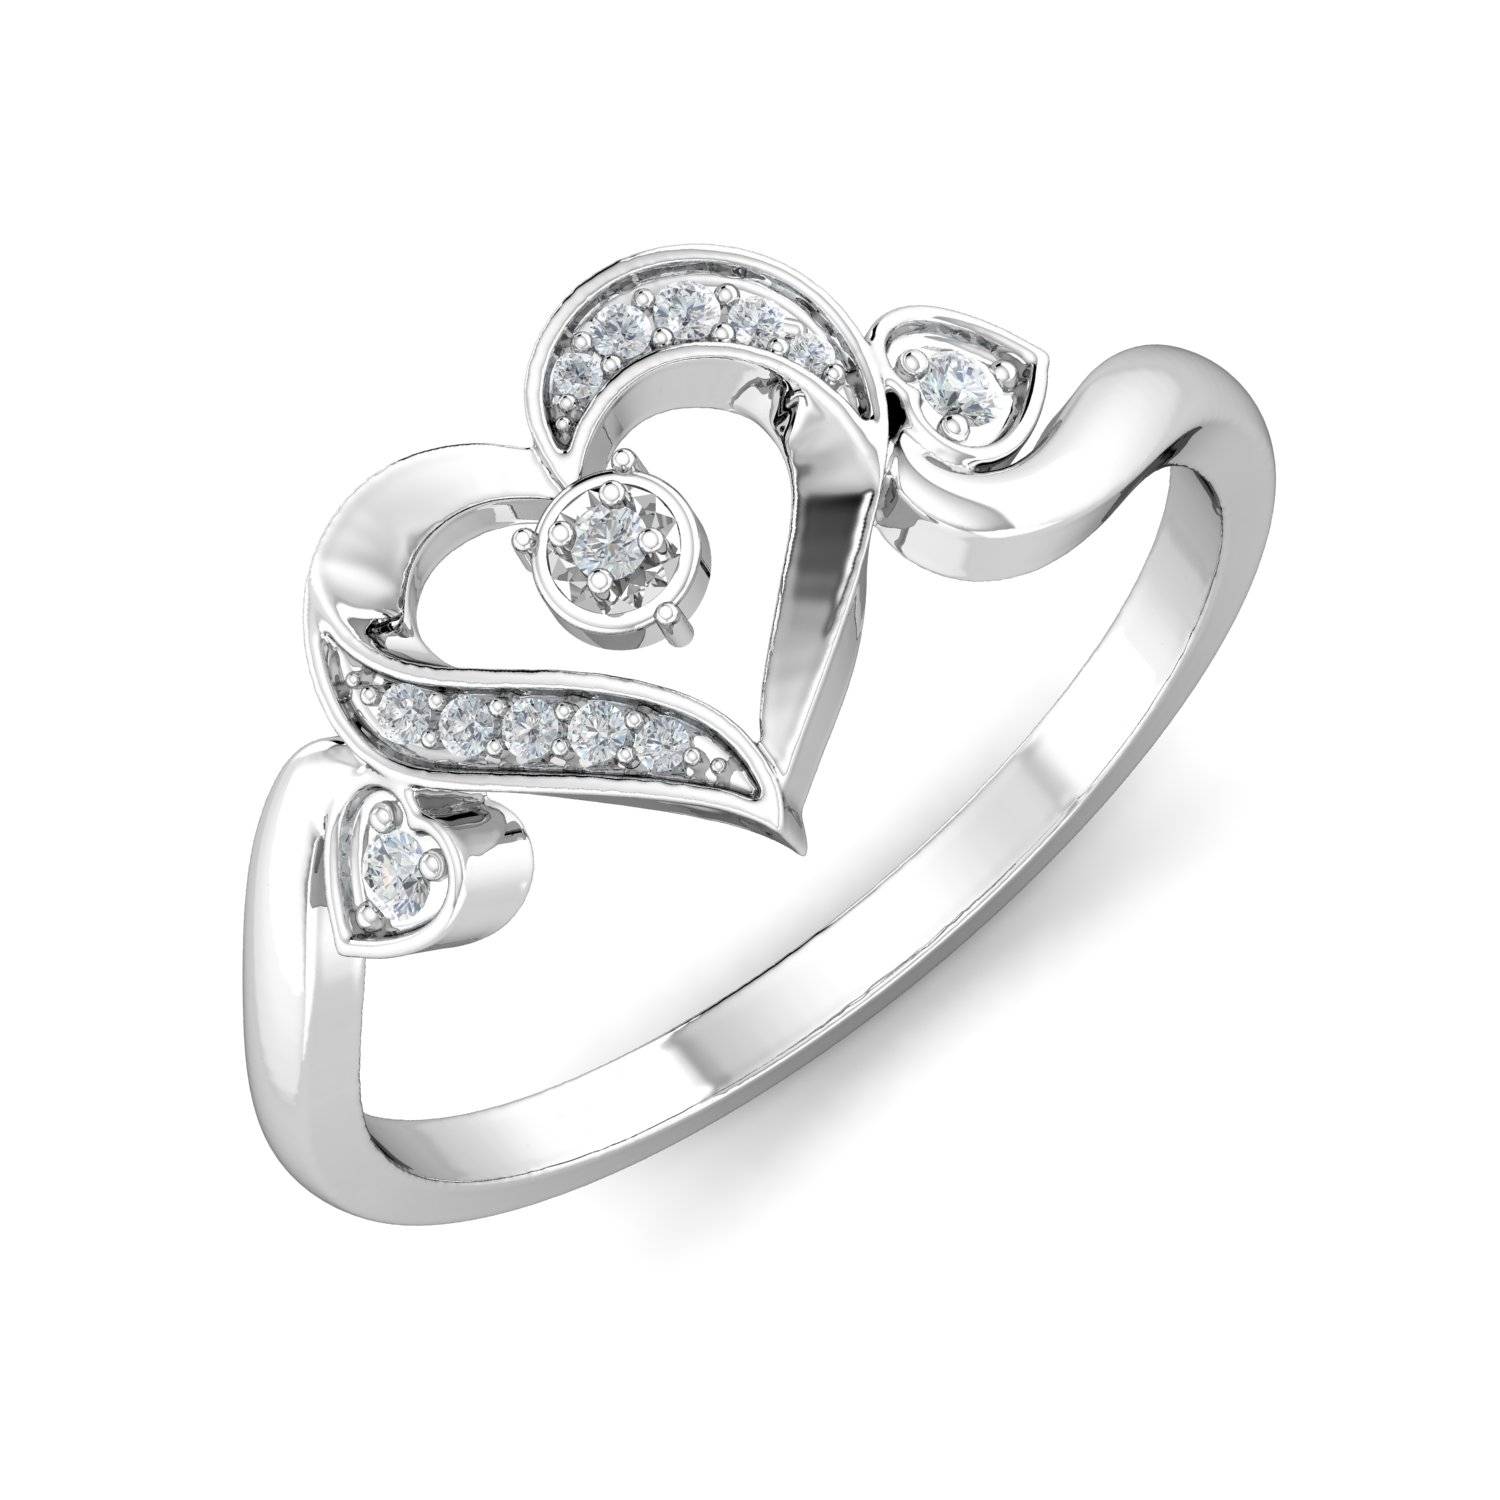 Iva Love Ring